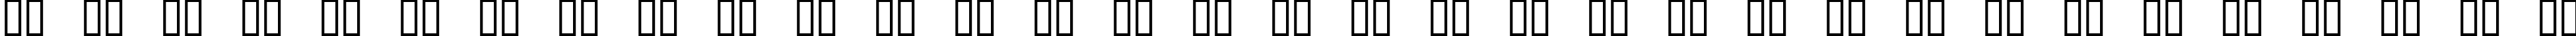 Пример написания русского алфавита шрифтом Excelerate Outline